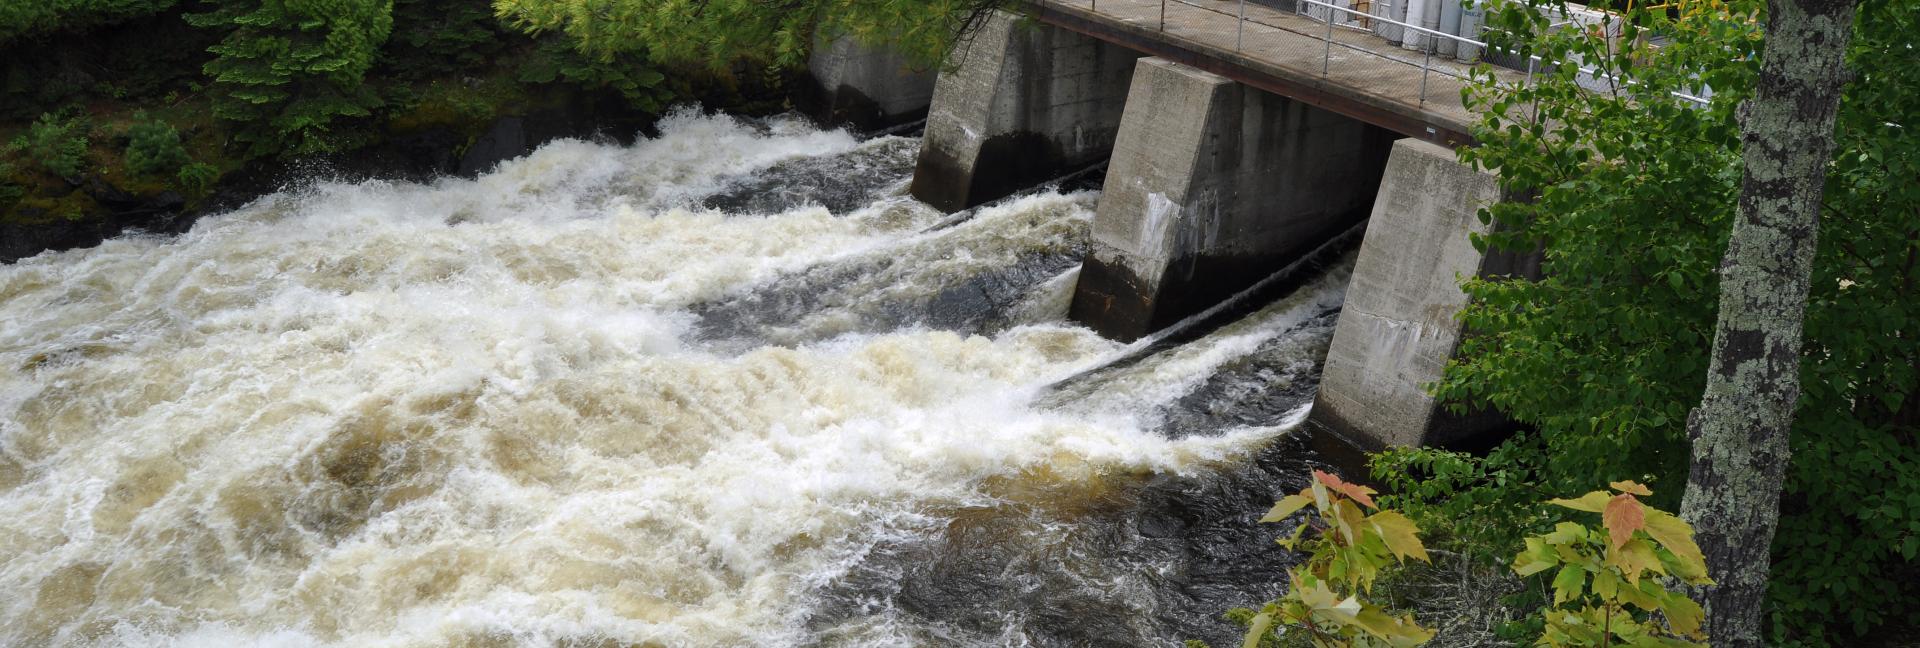 Kettle Falls, Minnesota - Water Rushing Through the Dam